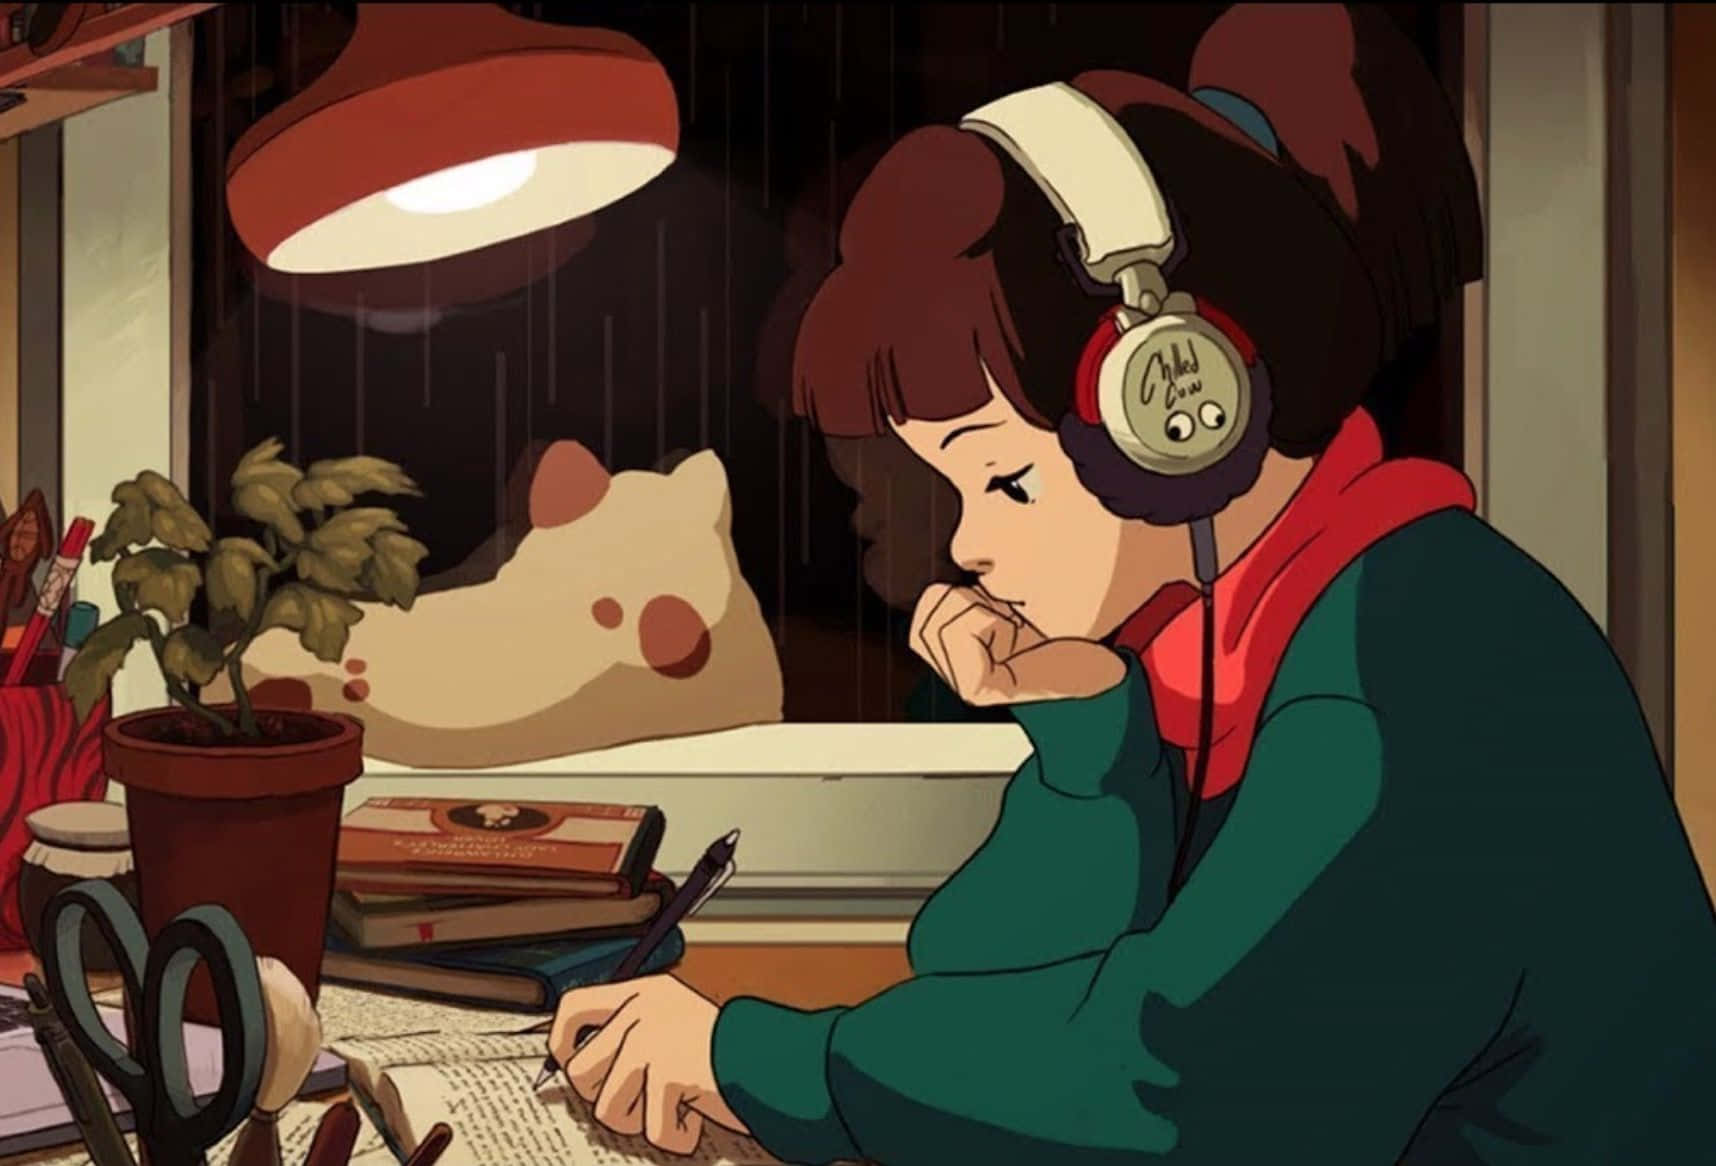 Lo Fi Anime Chill Girl Writing On Desk Wallpaper